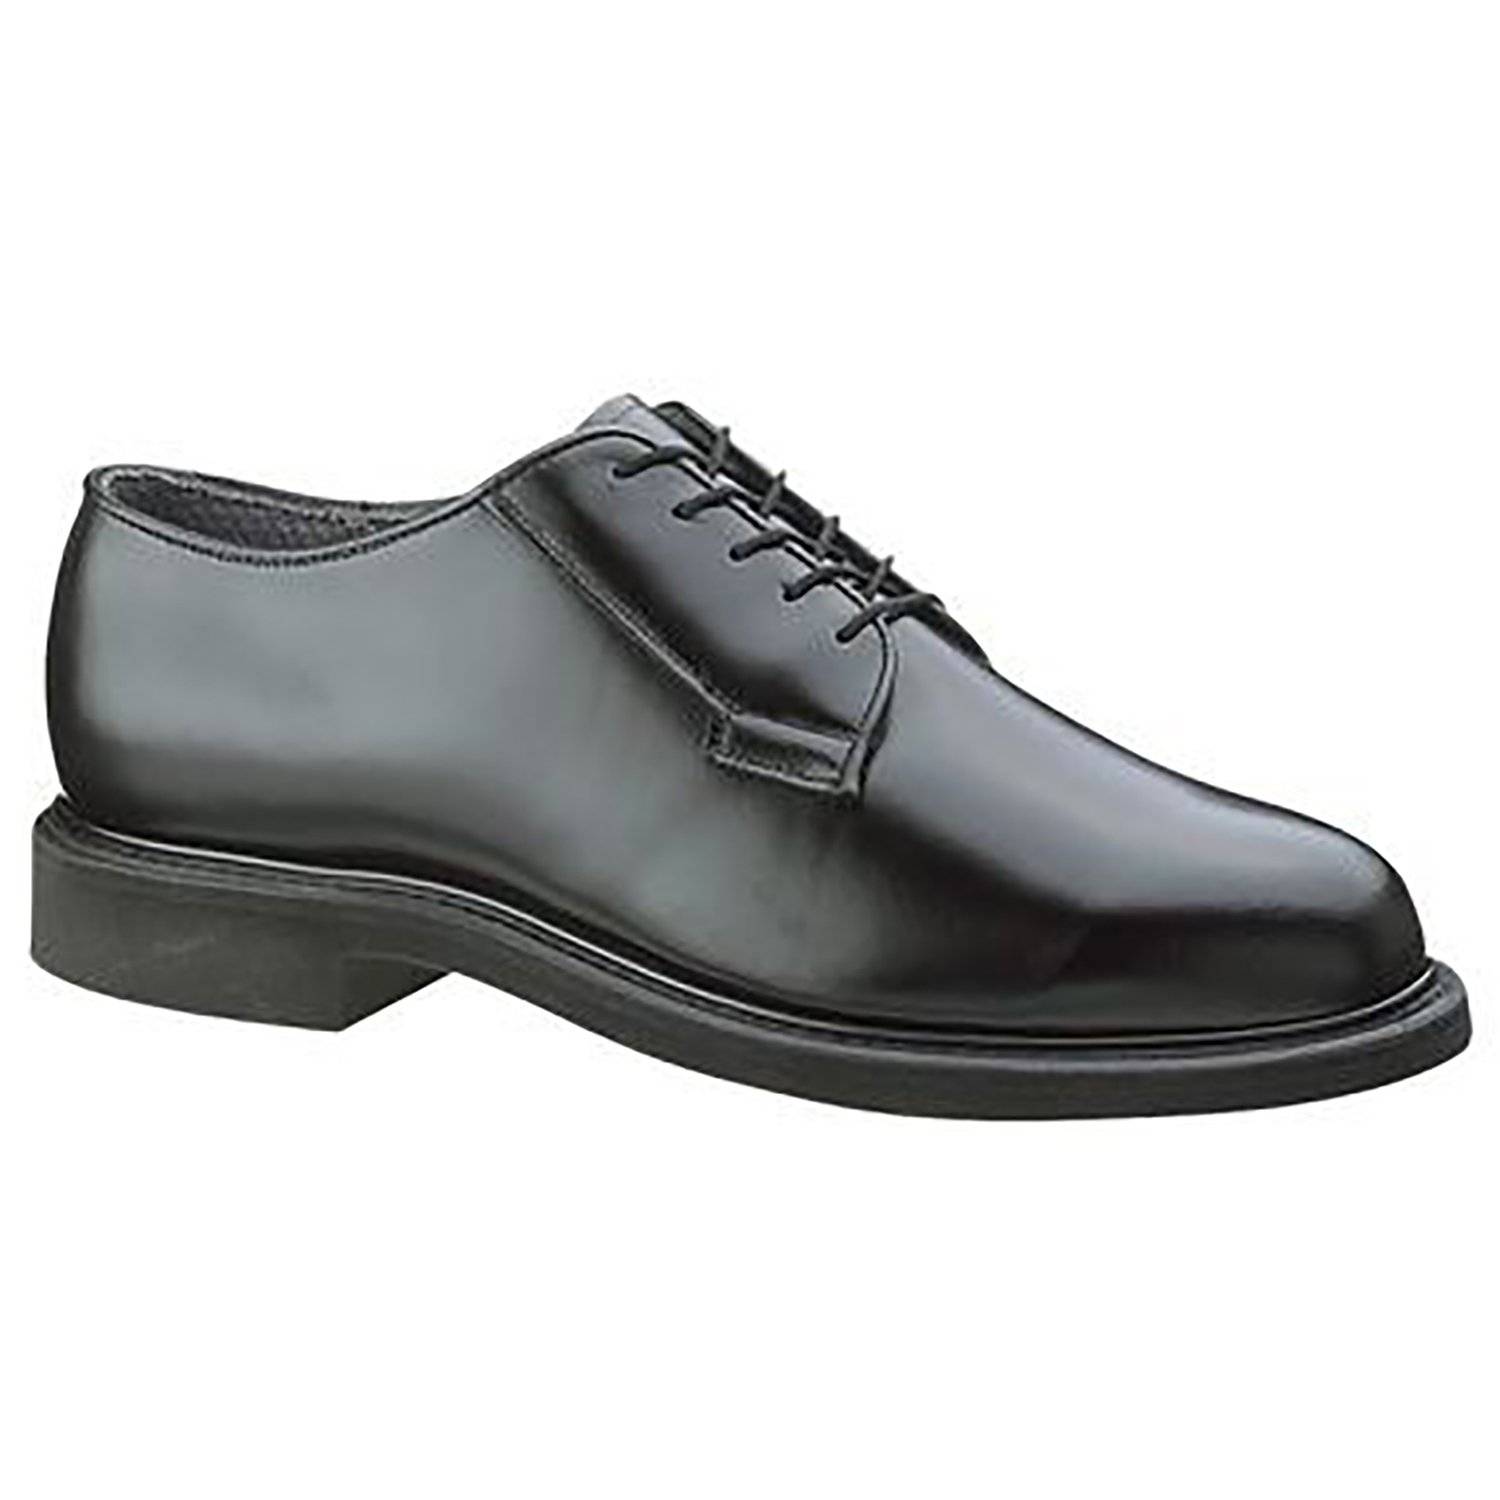 Bates Lites Black Leather Oxford Shoes